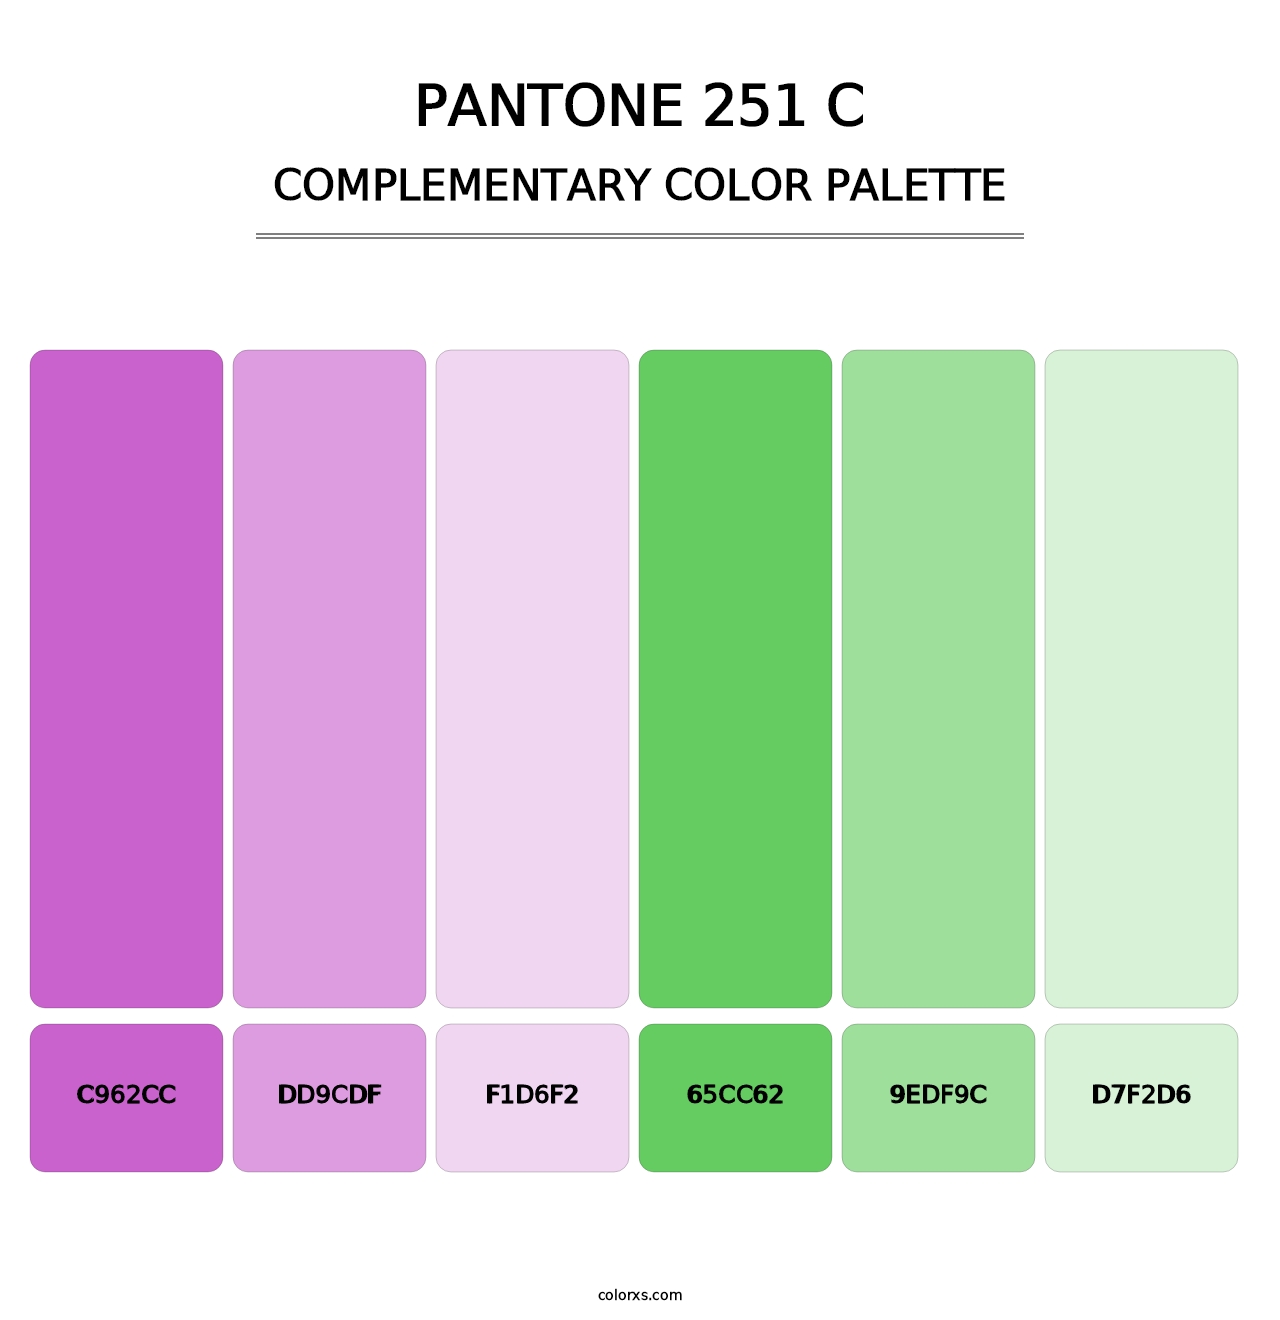 PANTONE 251 C - Complementary Color Palette